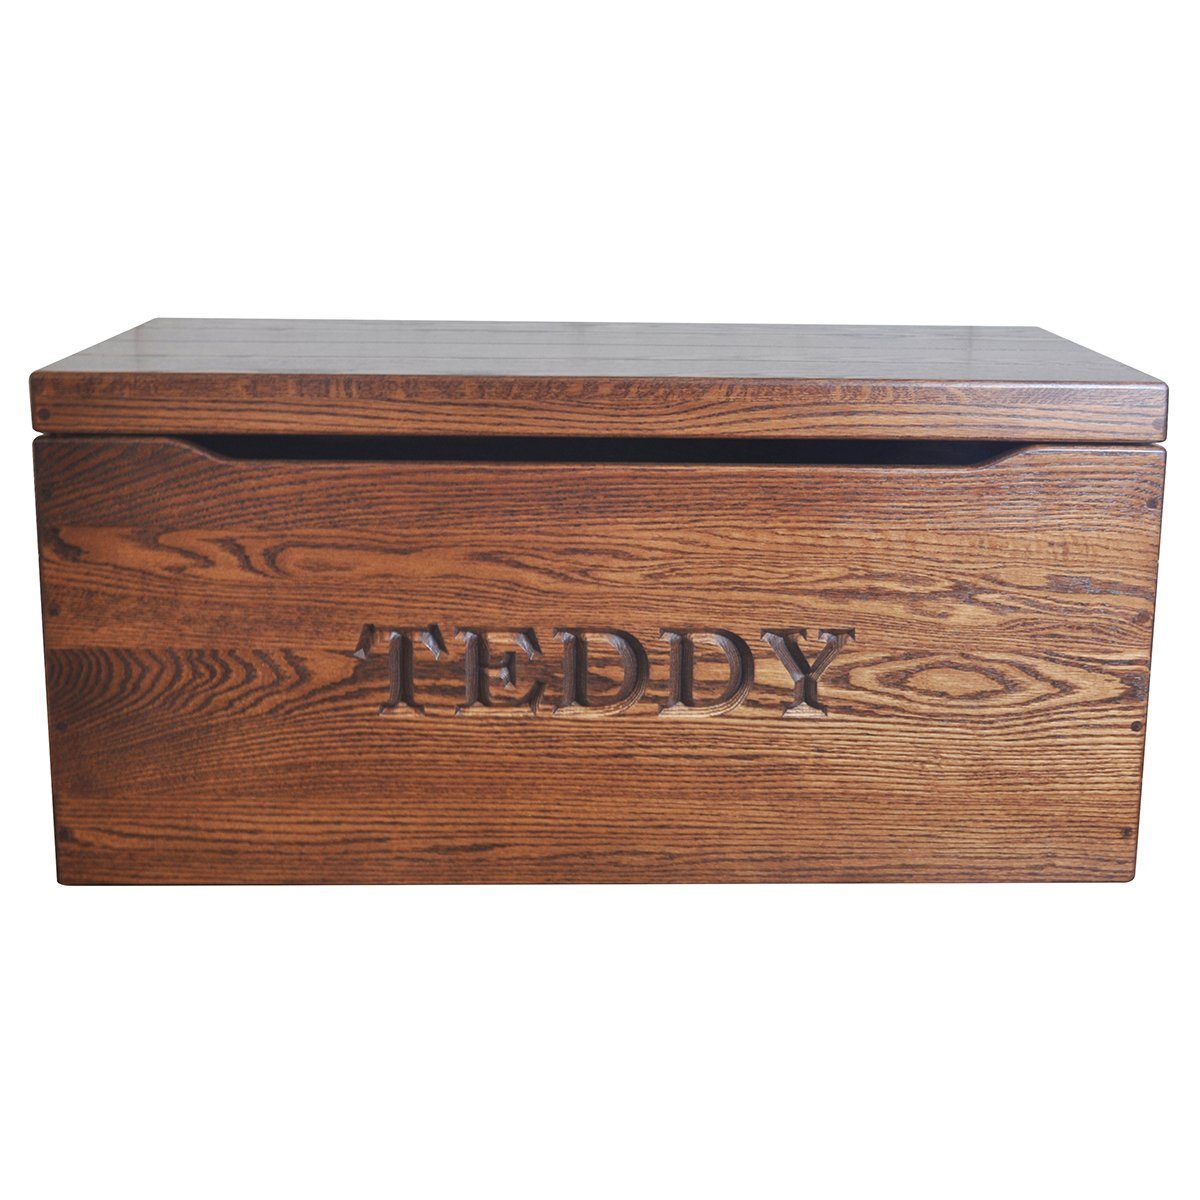 Engraved Wooden Blanket Chest "Teddy"